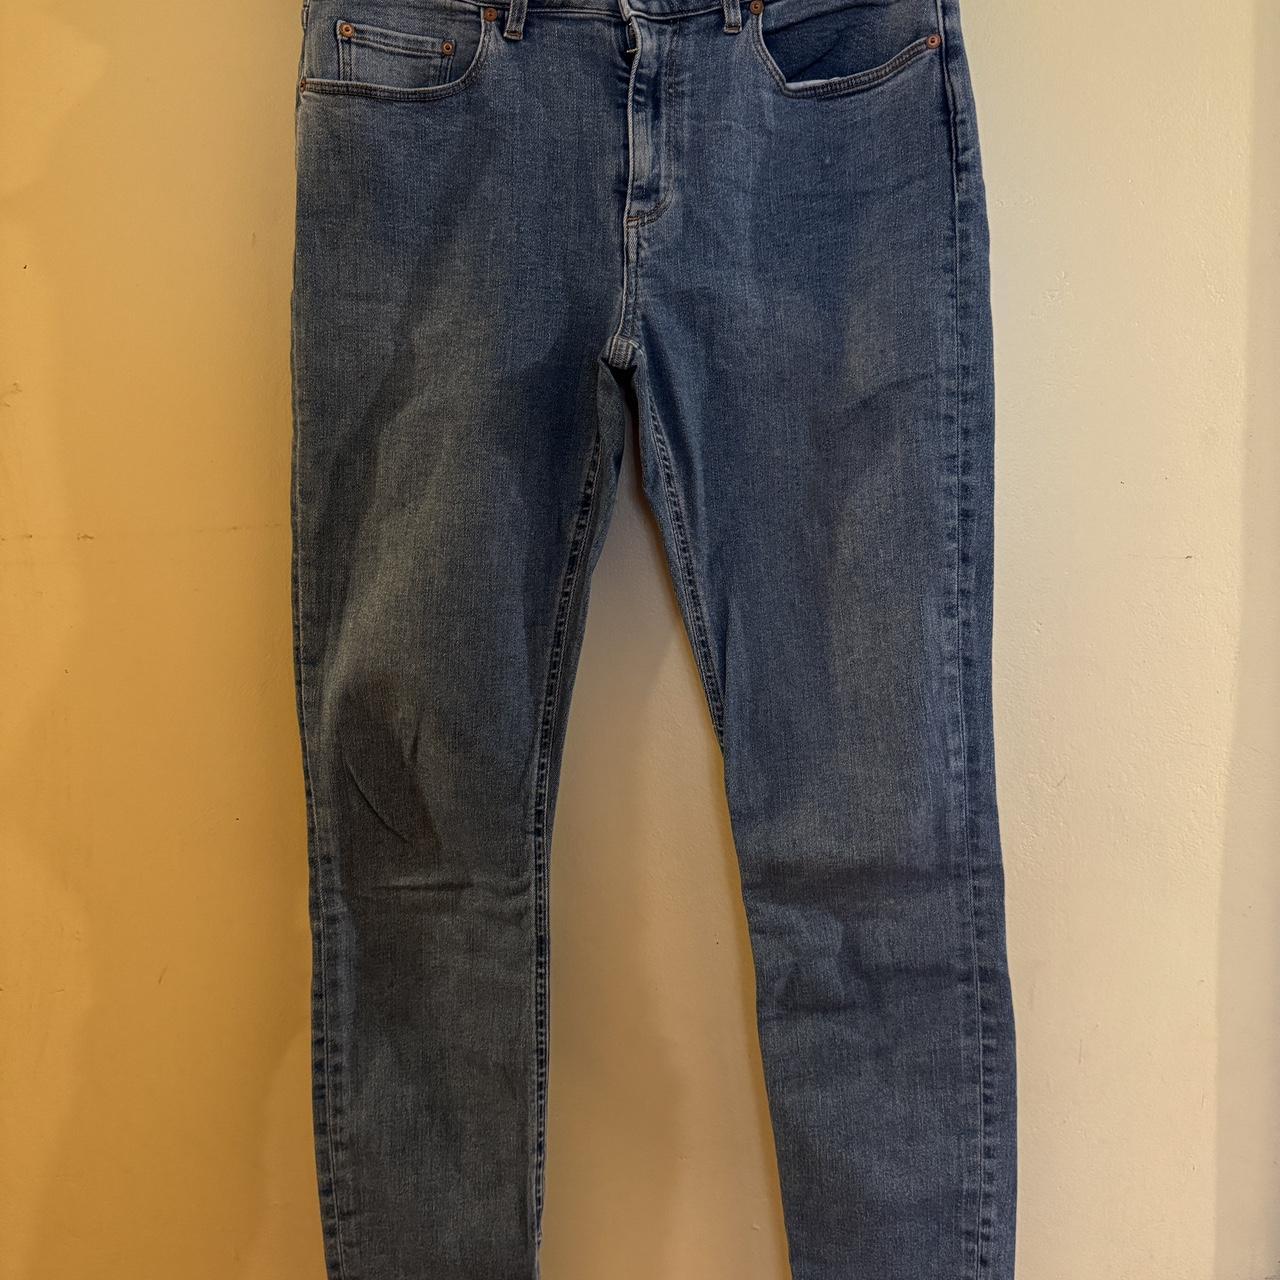 Acne Studios jeans - SKIN 5 mid vintage wash - waist... - Depop